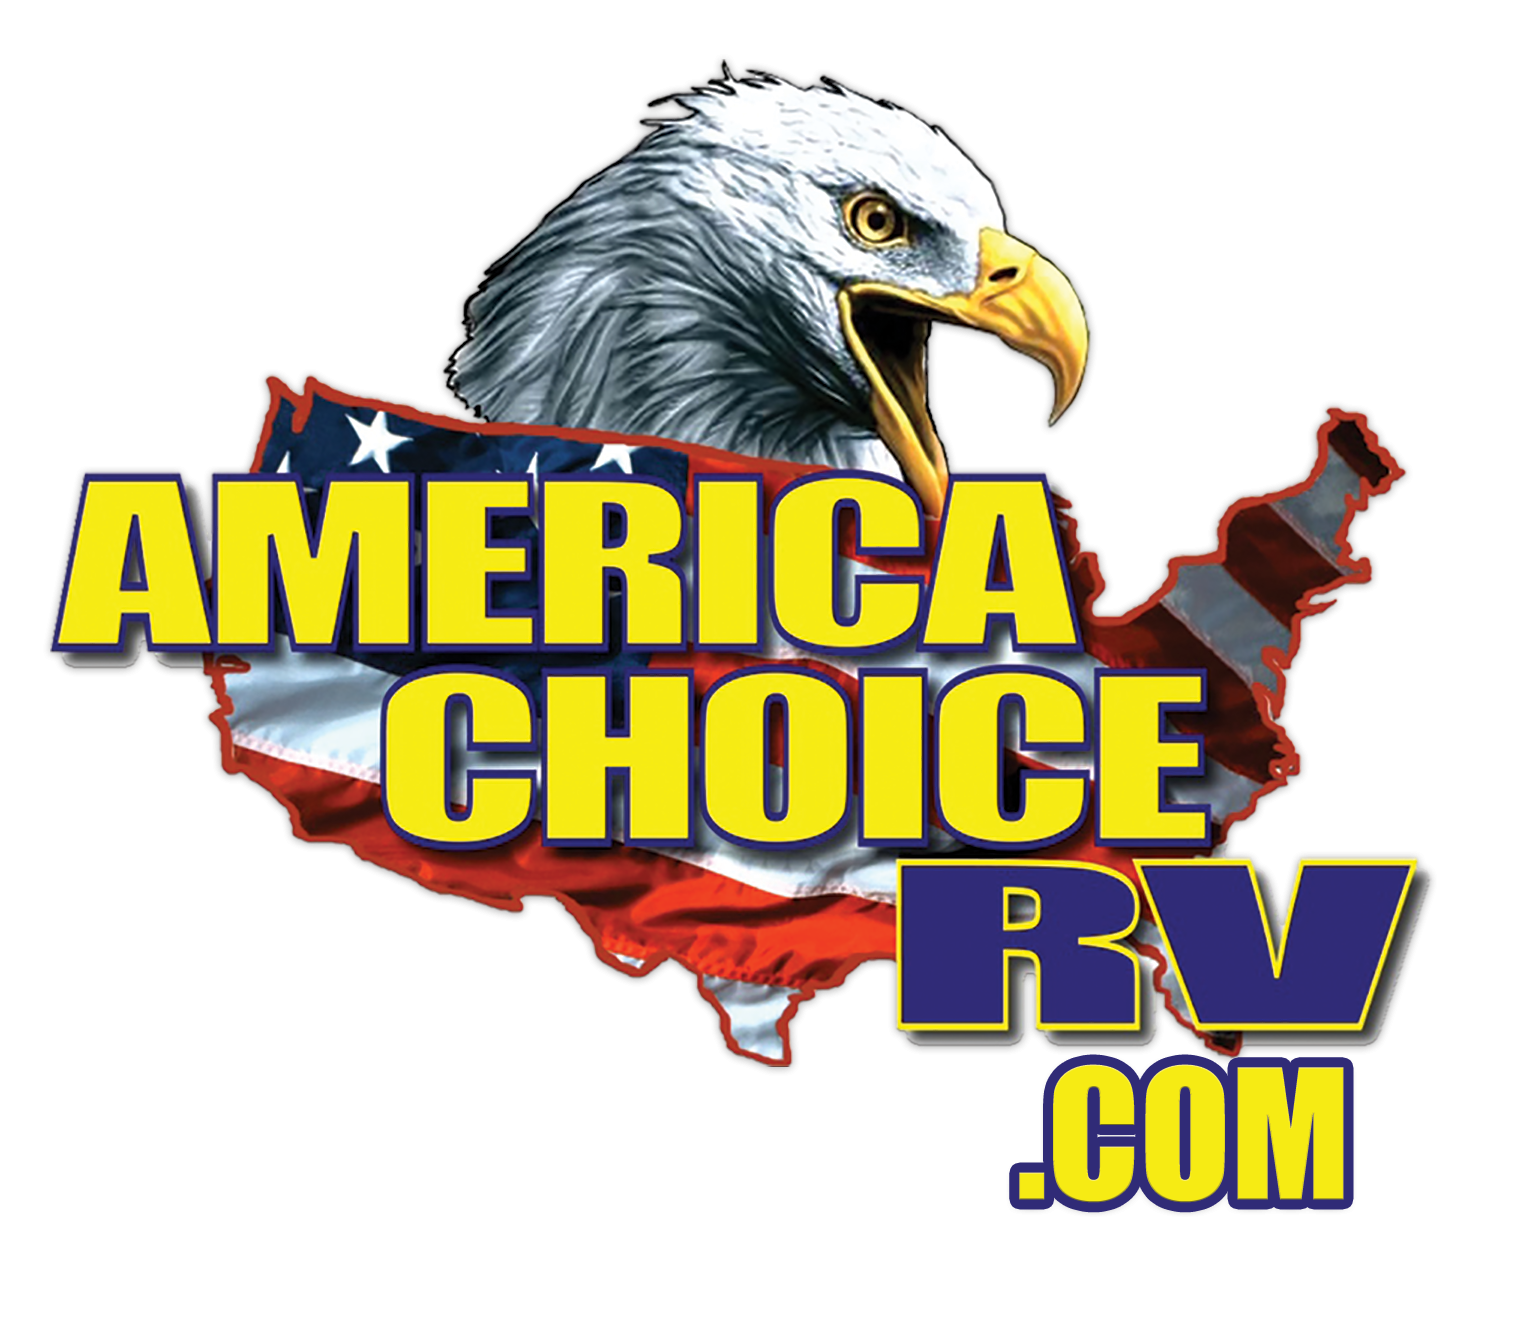 Company Logo For America Choice RV'